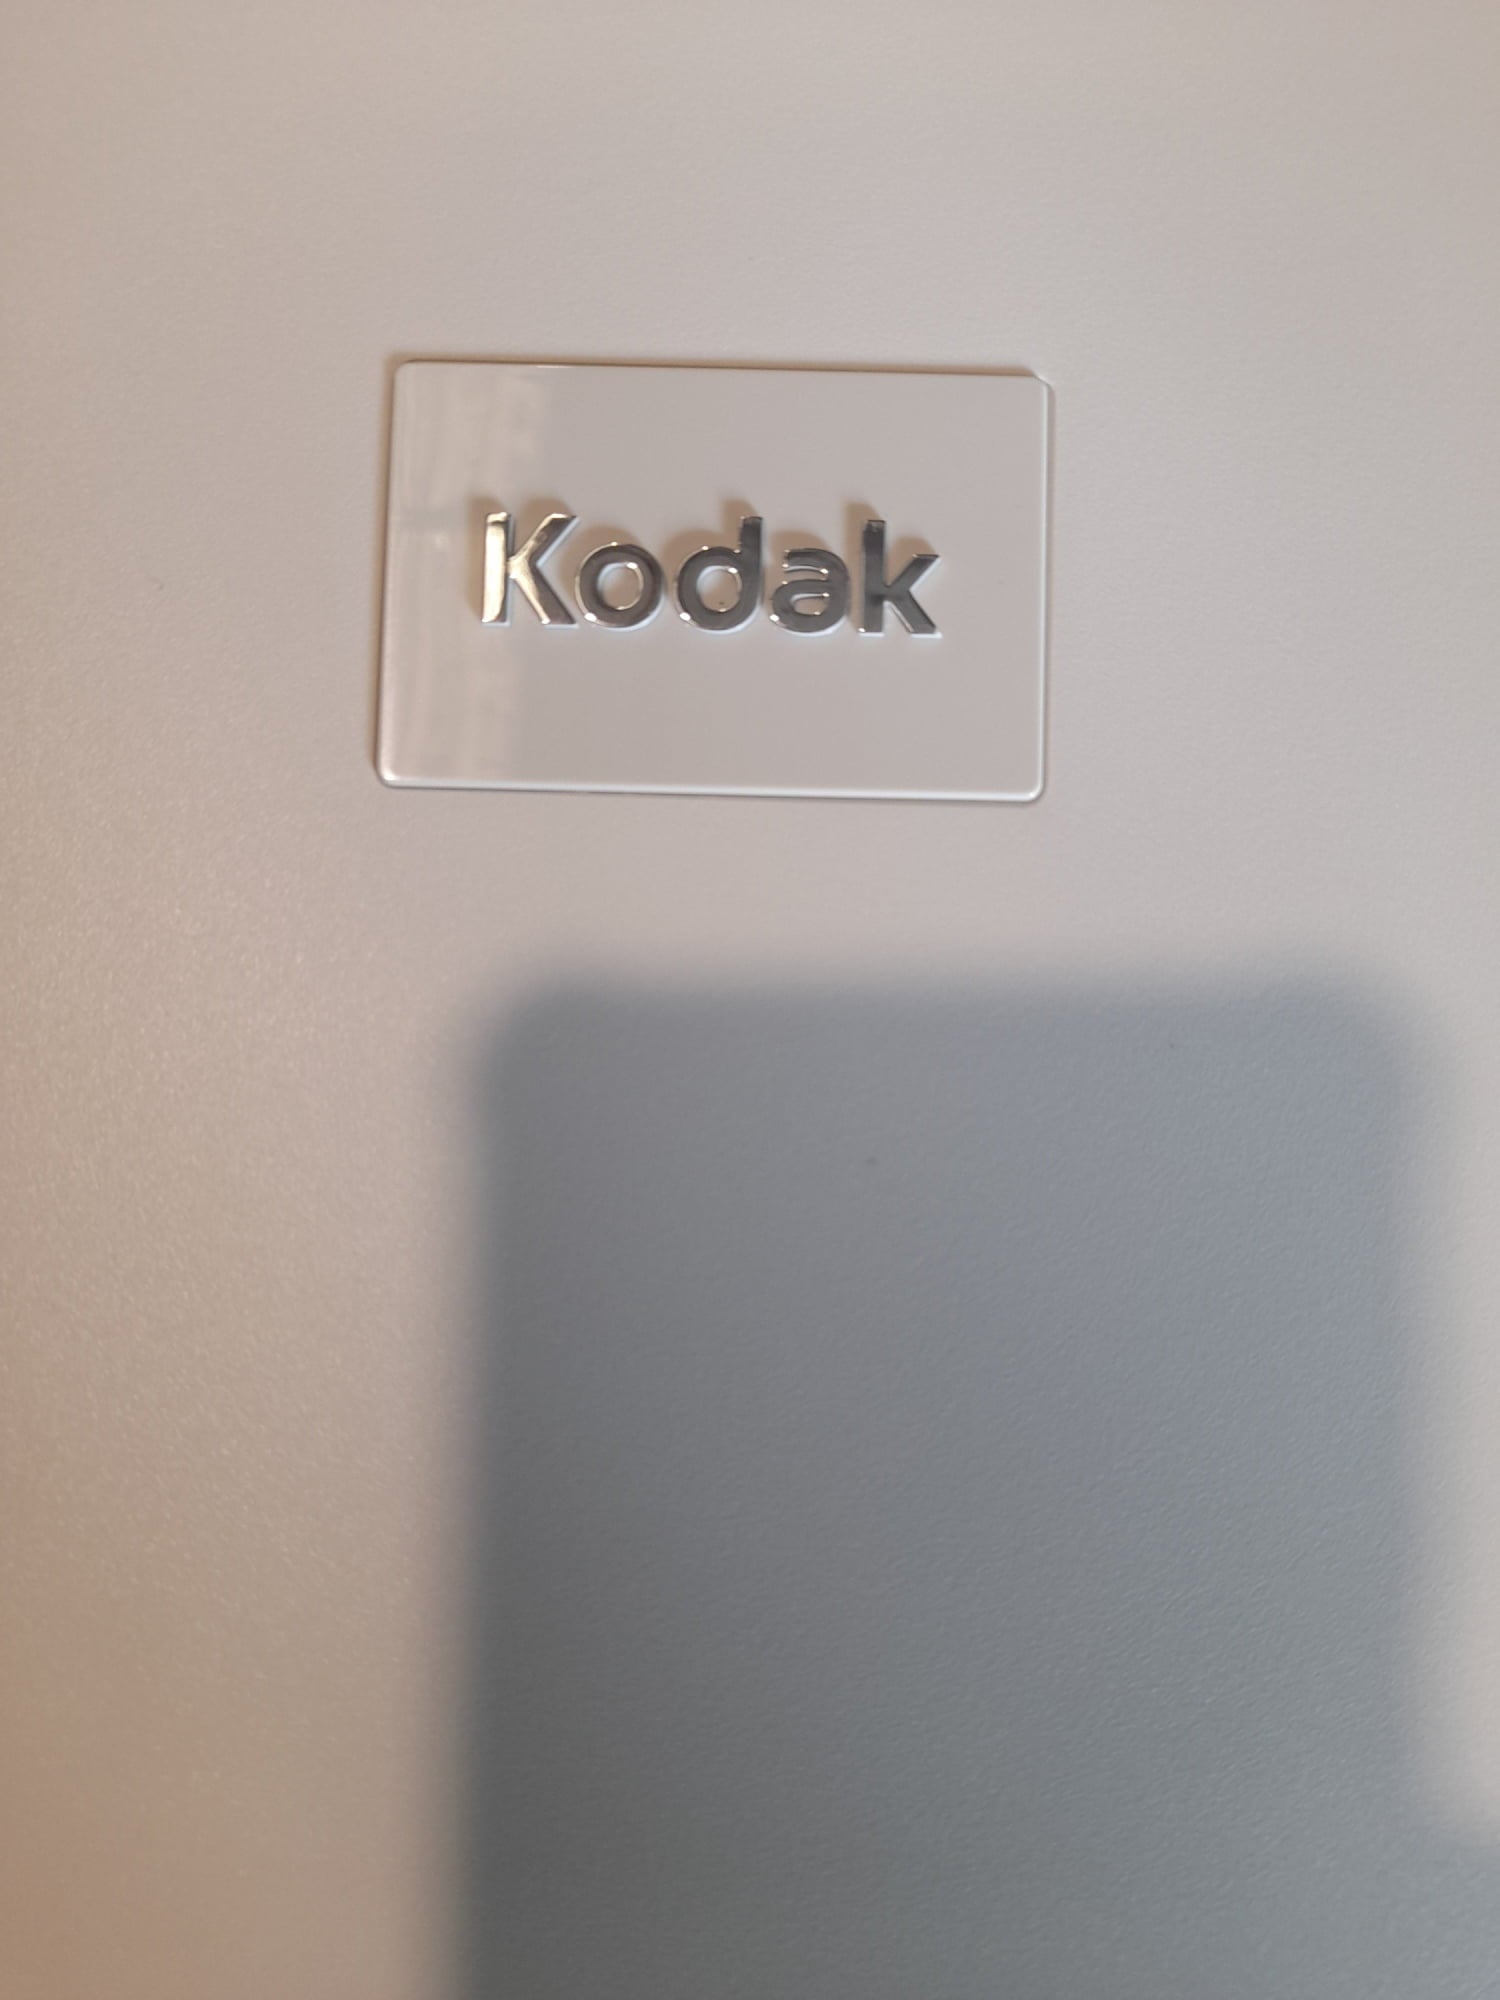 Kodak A3 Flatbed Scanner - White